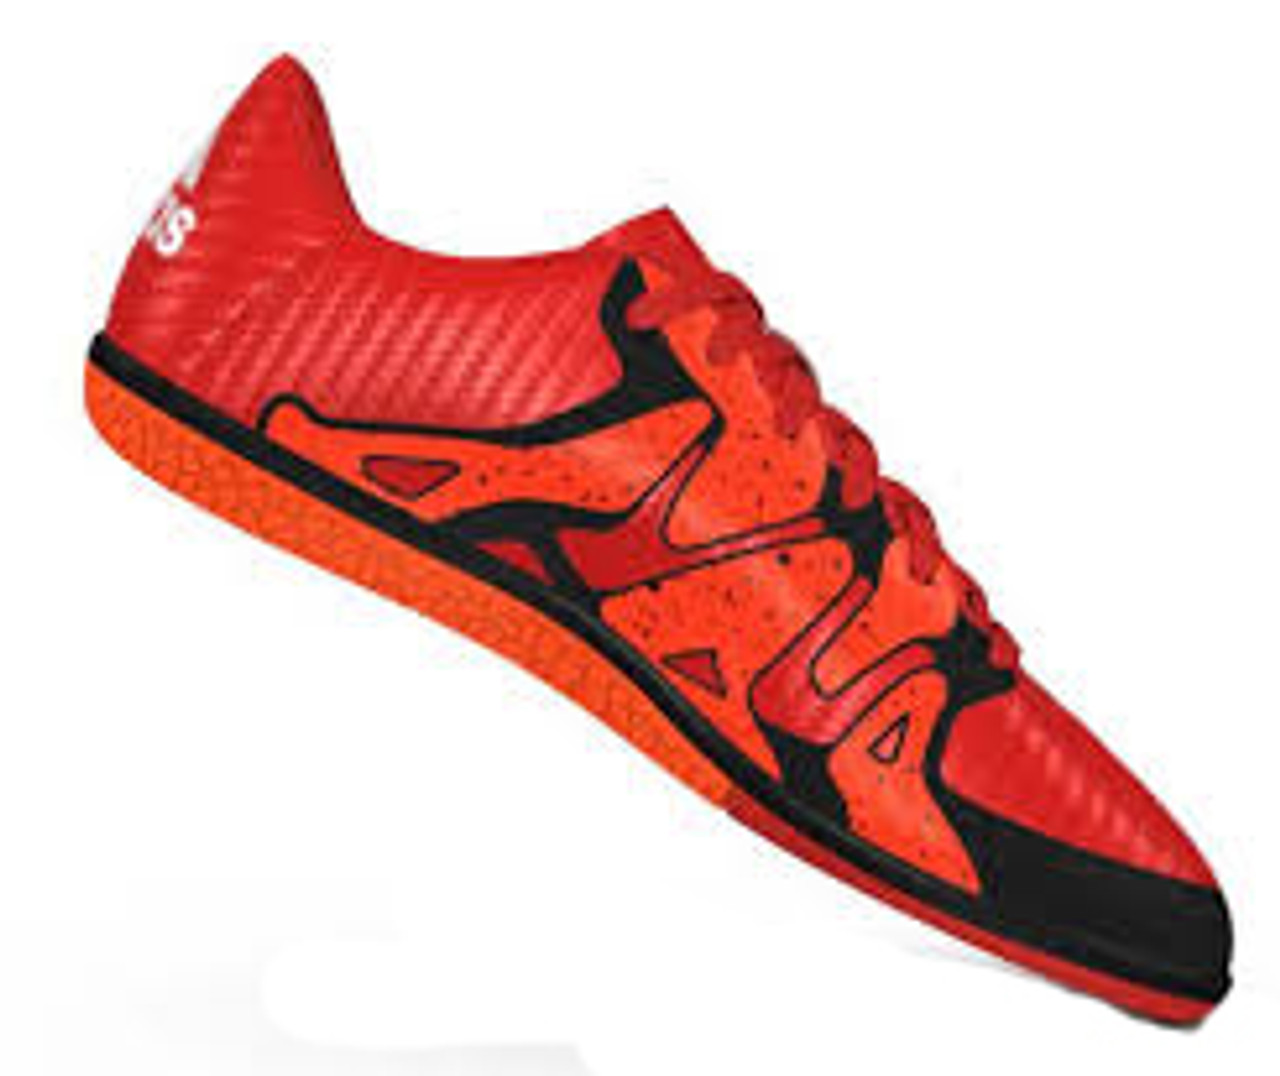 orange adidas indoor soccer shoes